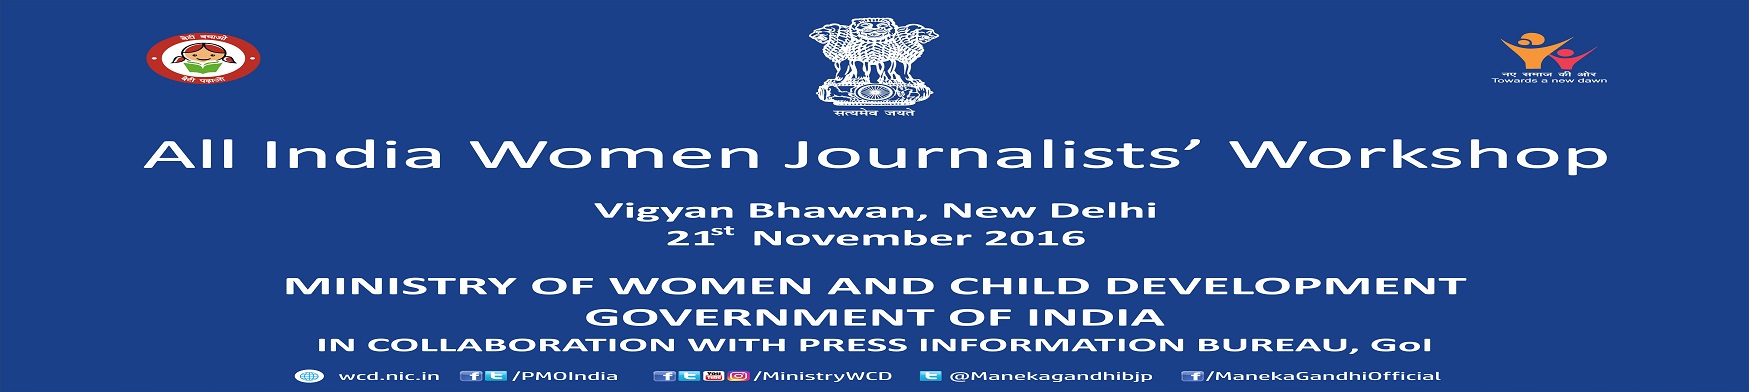 All India Women Journalists Workshop at Vigyan Bhawan 10